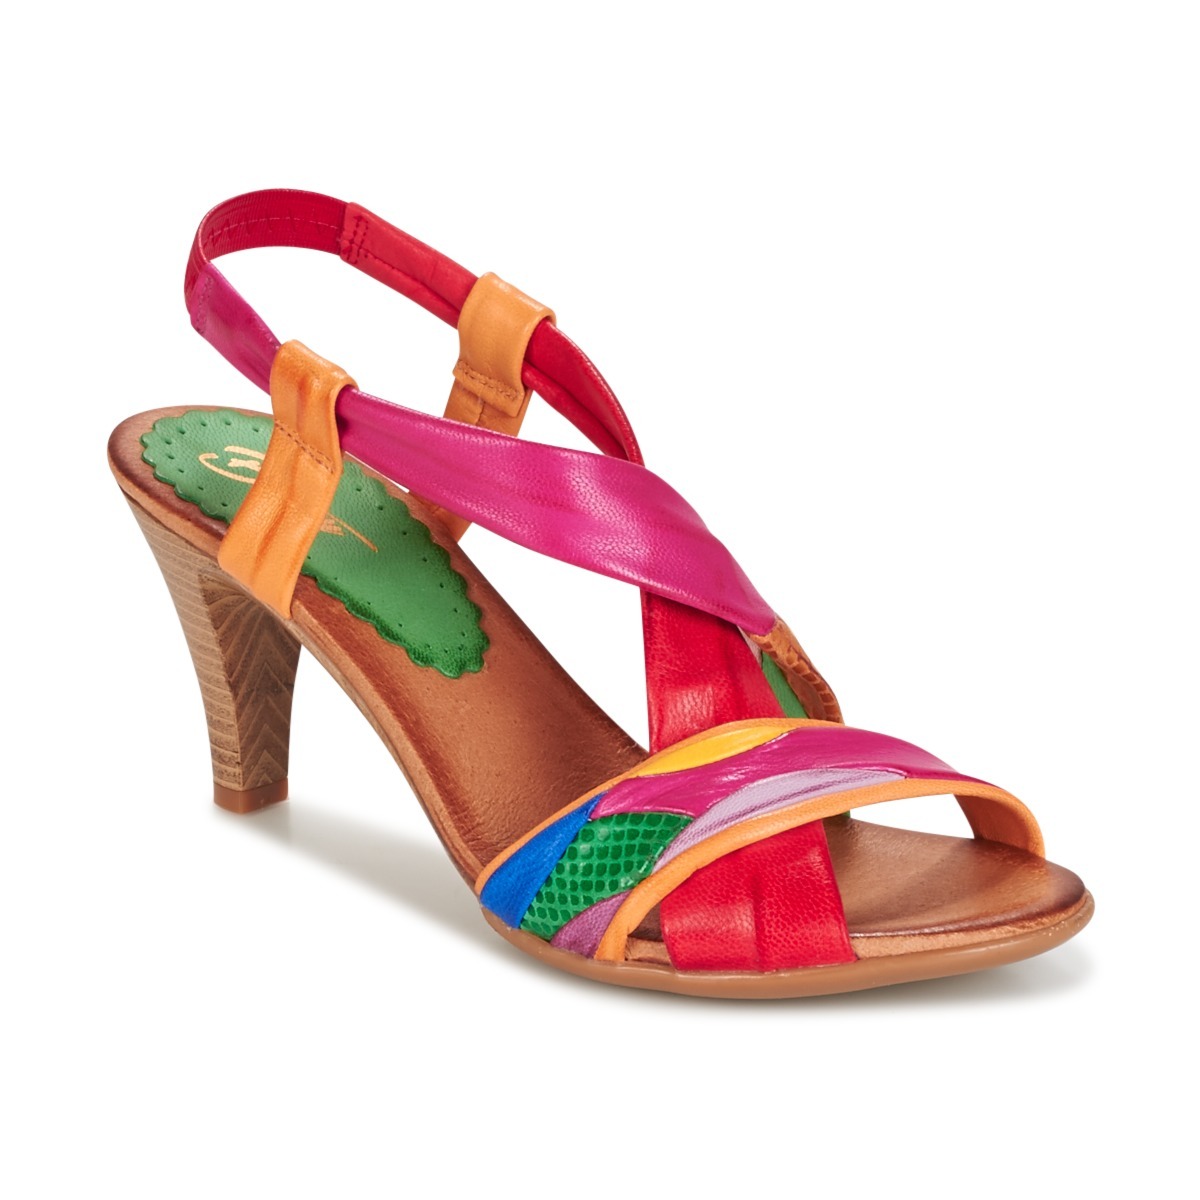 Spartoo - Sandals Multicolor Betty London Woman GOOFASH